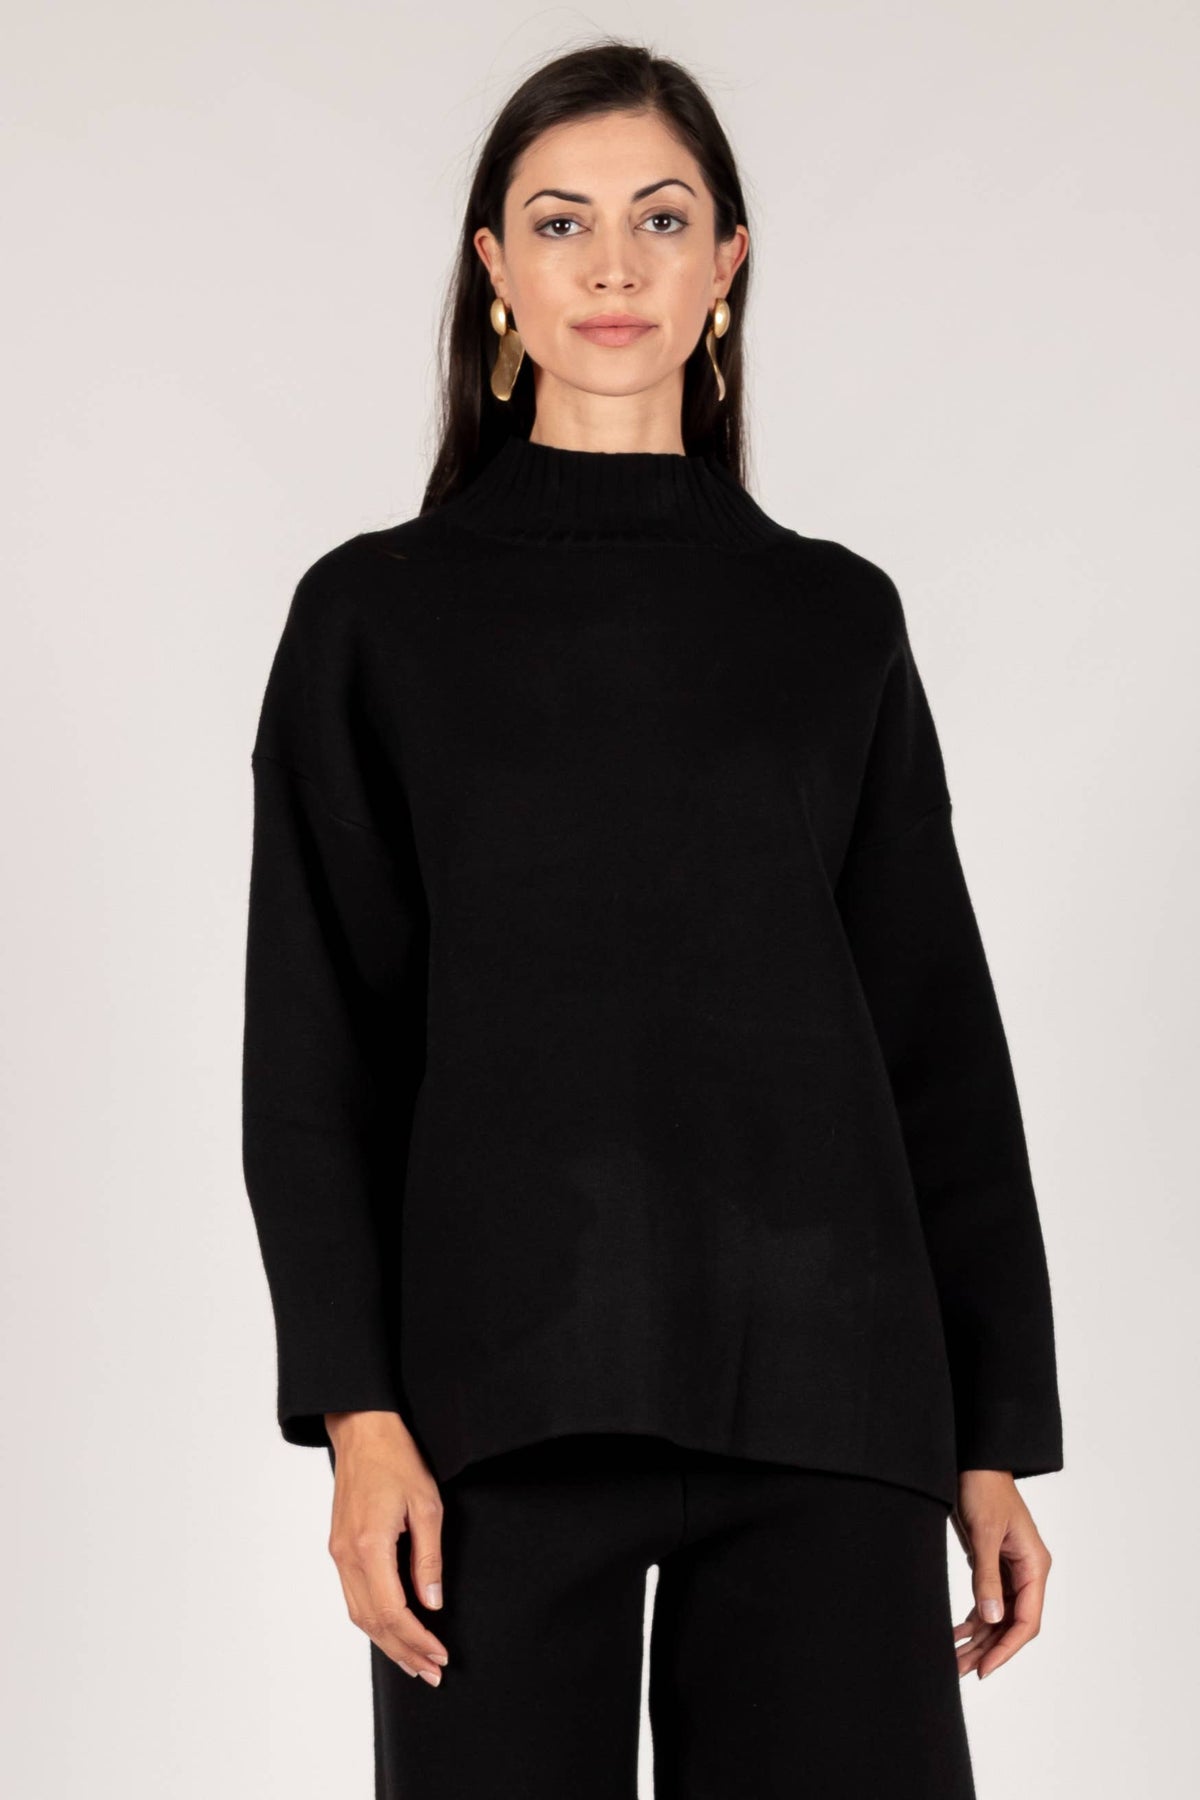 P. CILL Turtleneck Sweater Top: Black